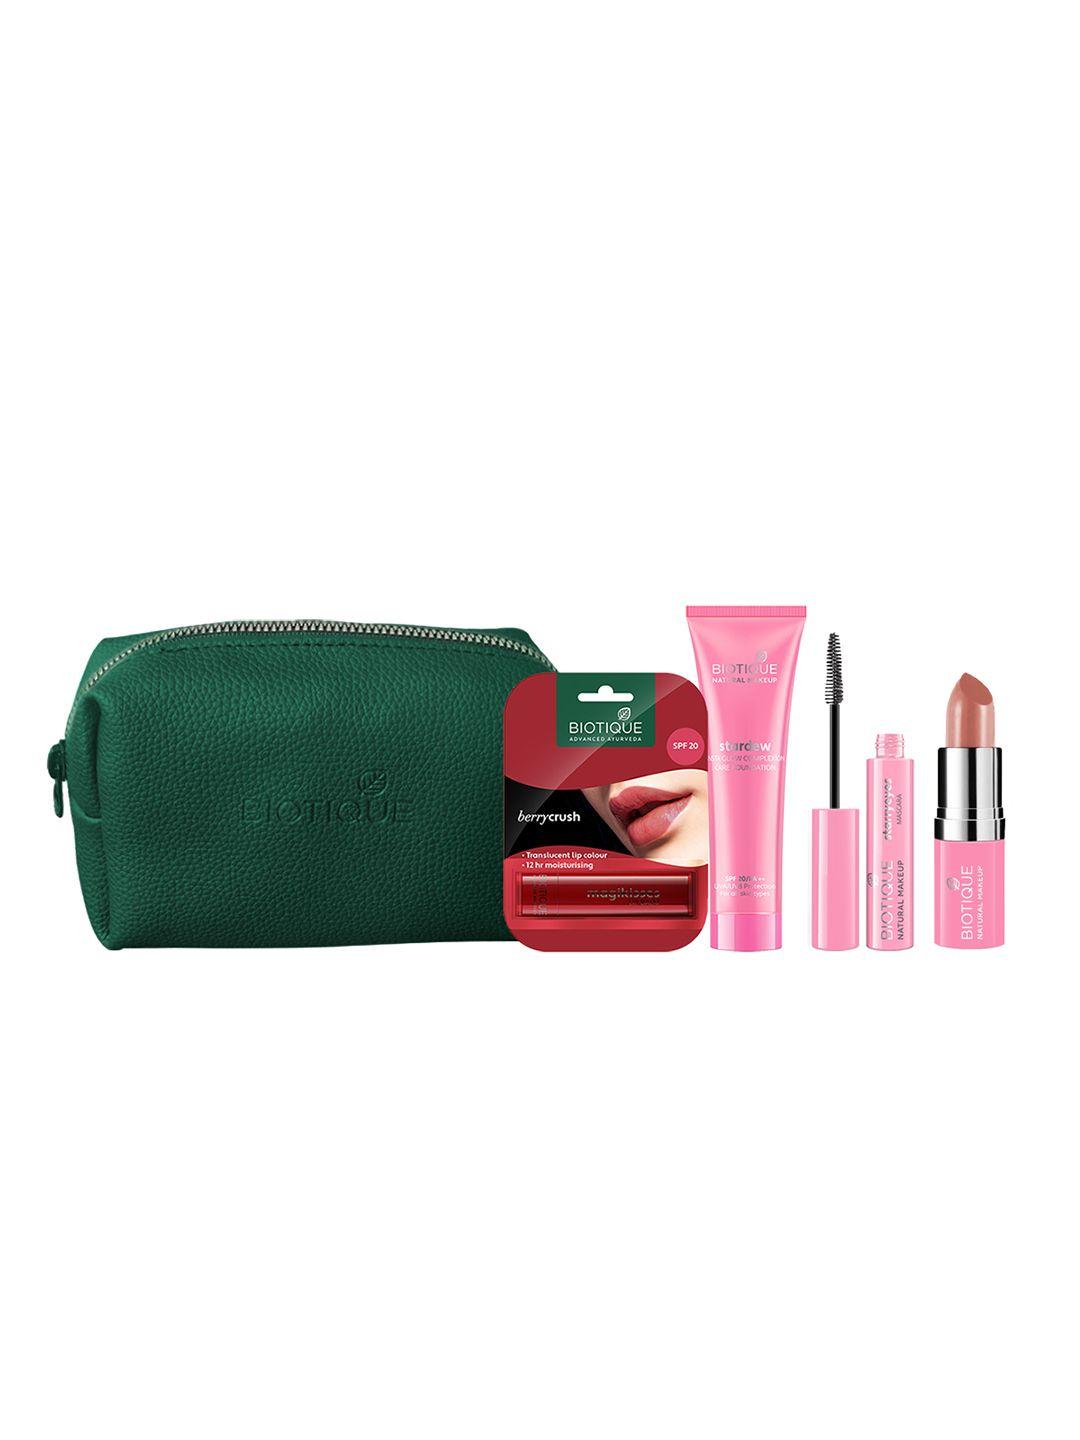 biotique natural makeup wakeup makeup everyday essentials makeup gift kit with pouch